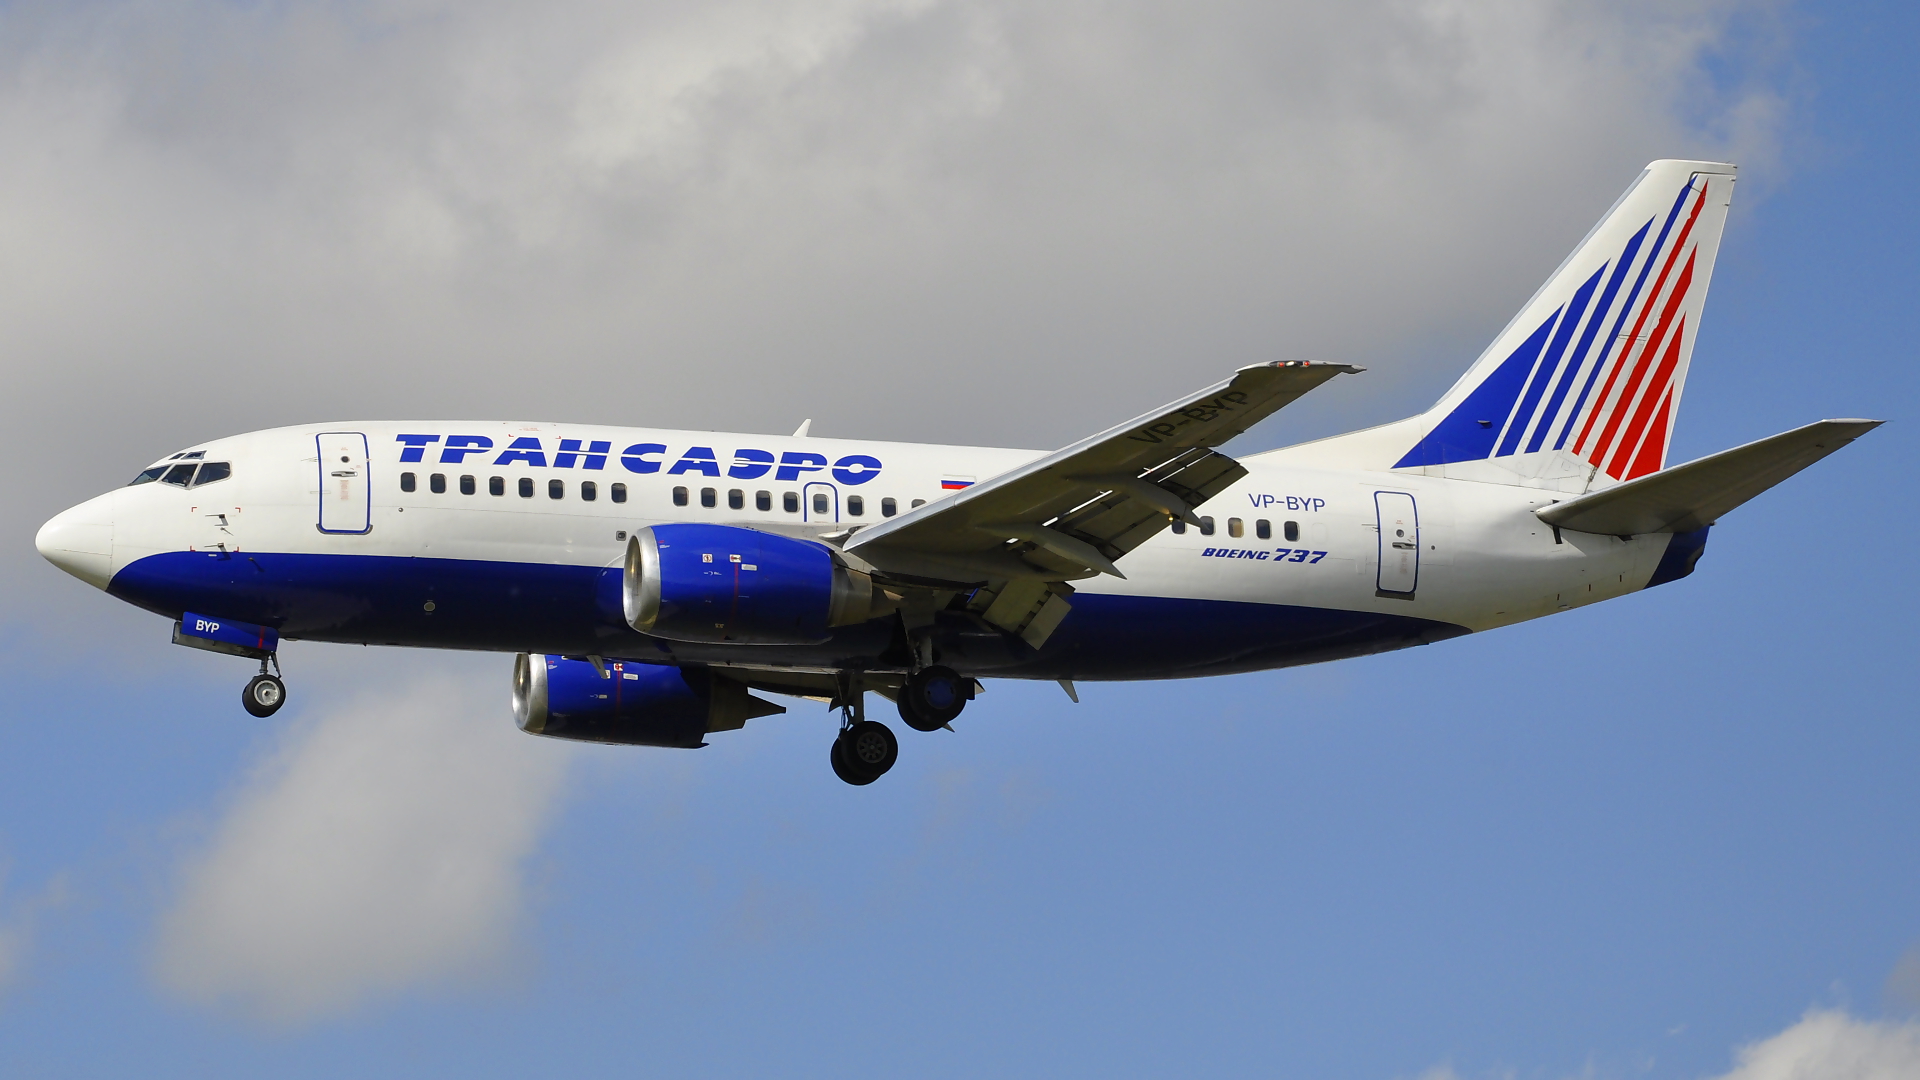 VP-BYP ✈ Transaero Airlines Boeing 737-524 @ London-Heathrow